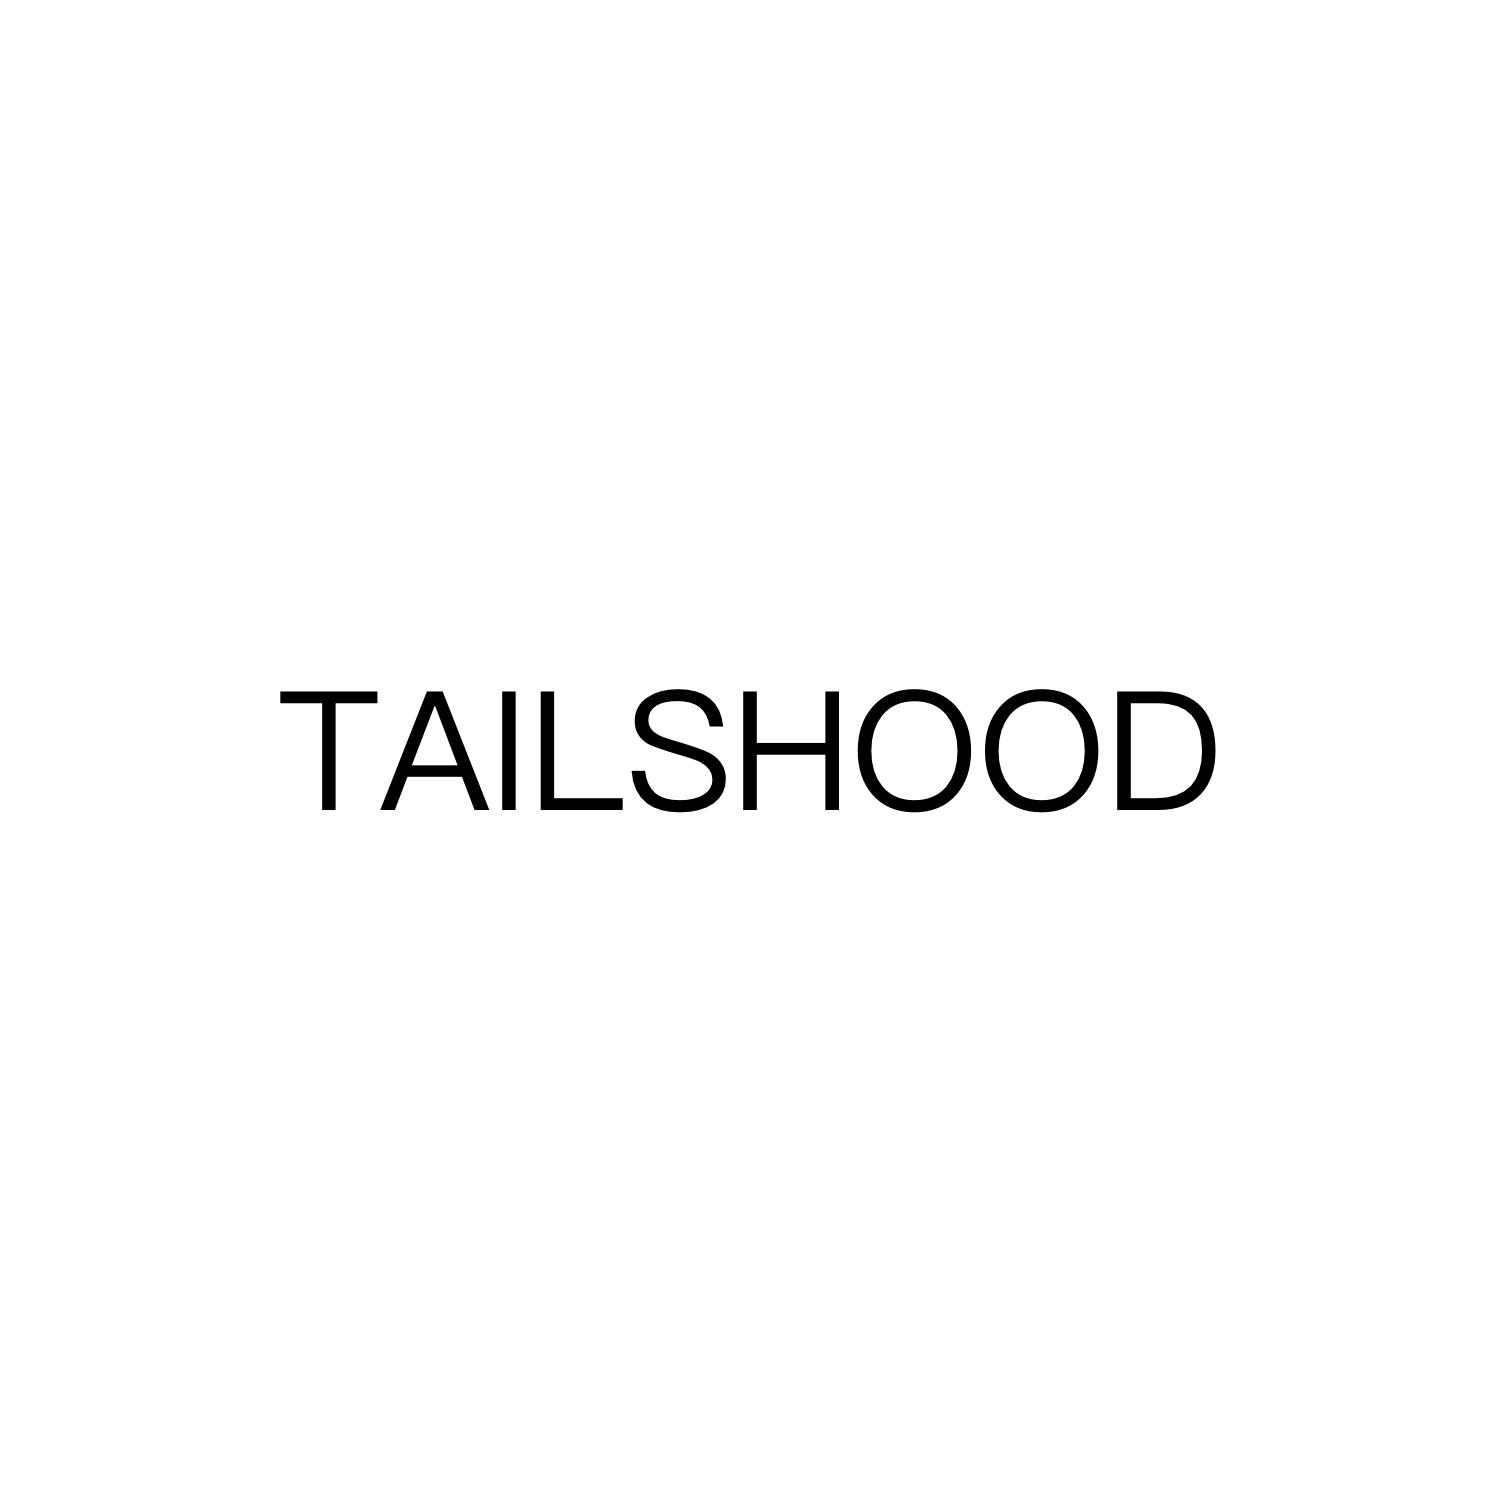 TAILSHOOD